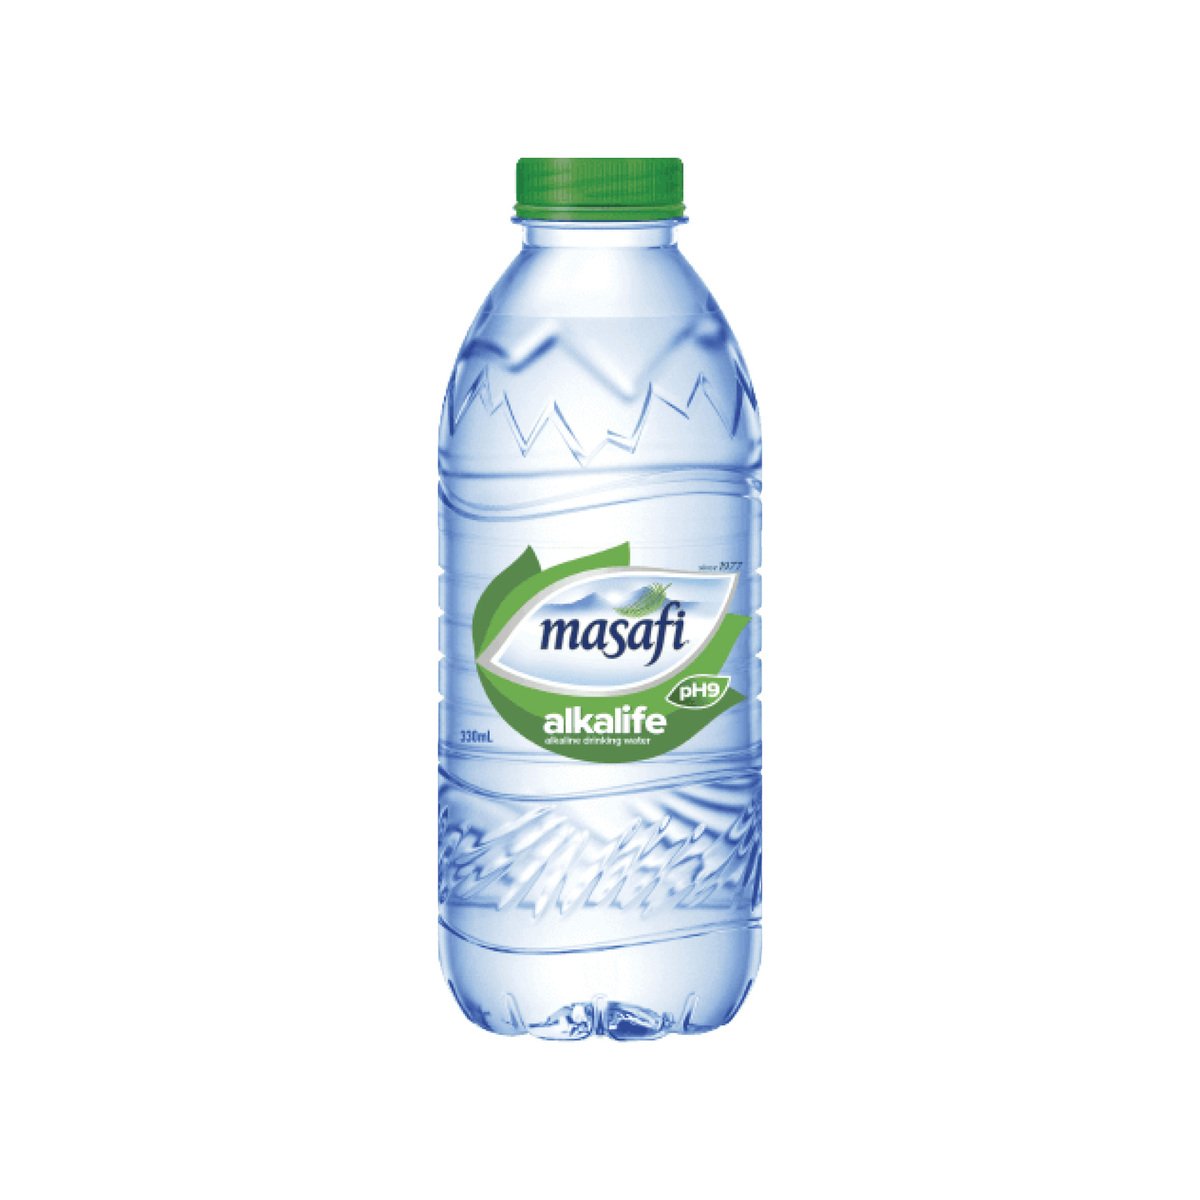 Masafi Alkalife Alkaline Water 330 ml